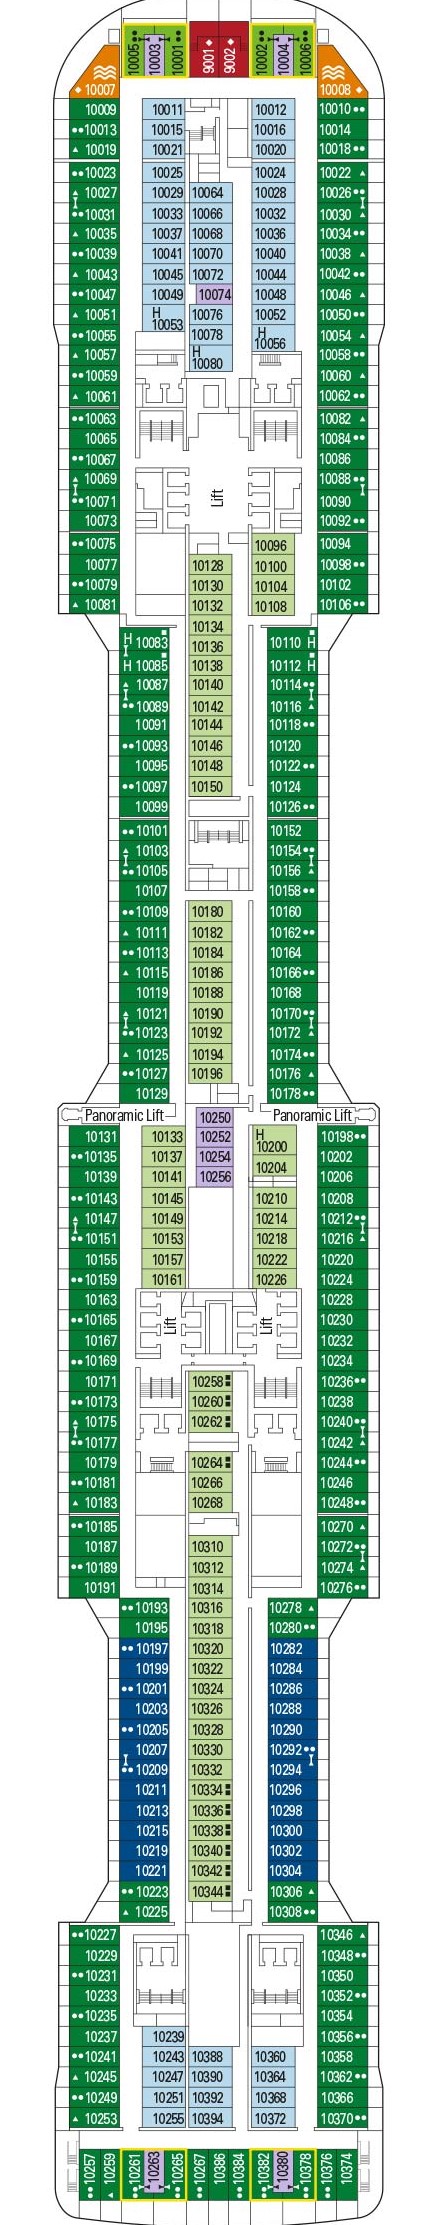 Hagia Sofia Deck Plan